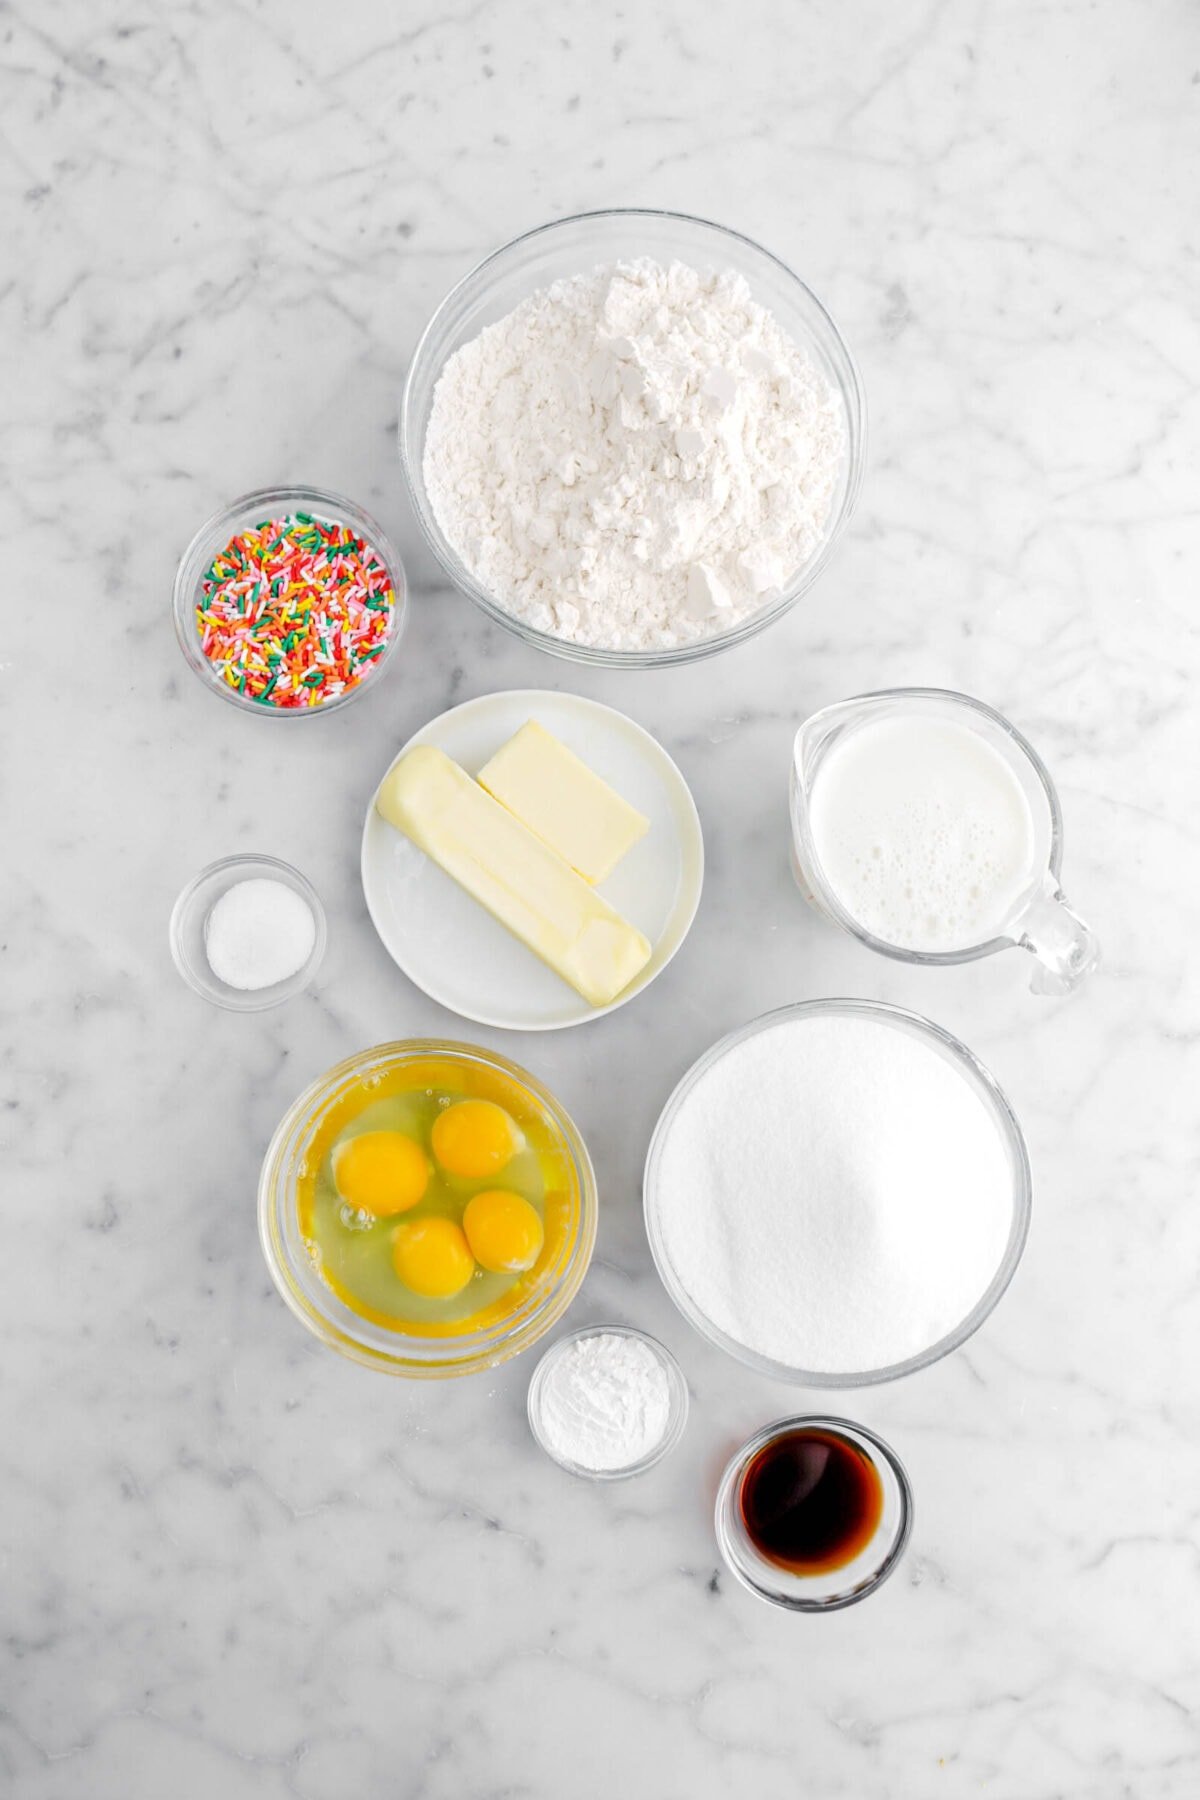 flour, rainbow sprinkles, butter, milk, salt, eggs, baking powder, sugar, and vanilla on marble surface.